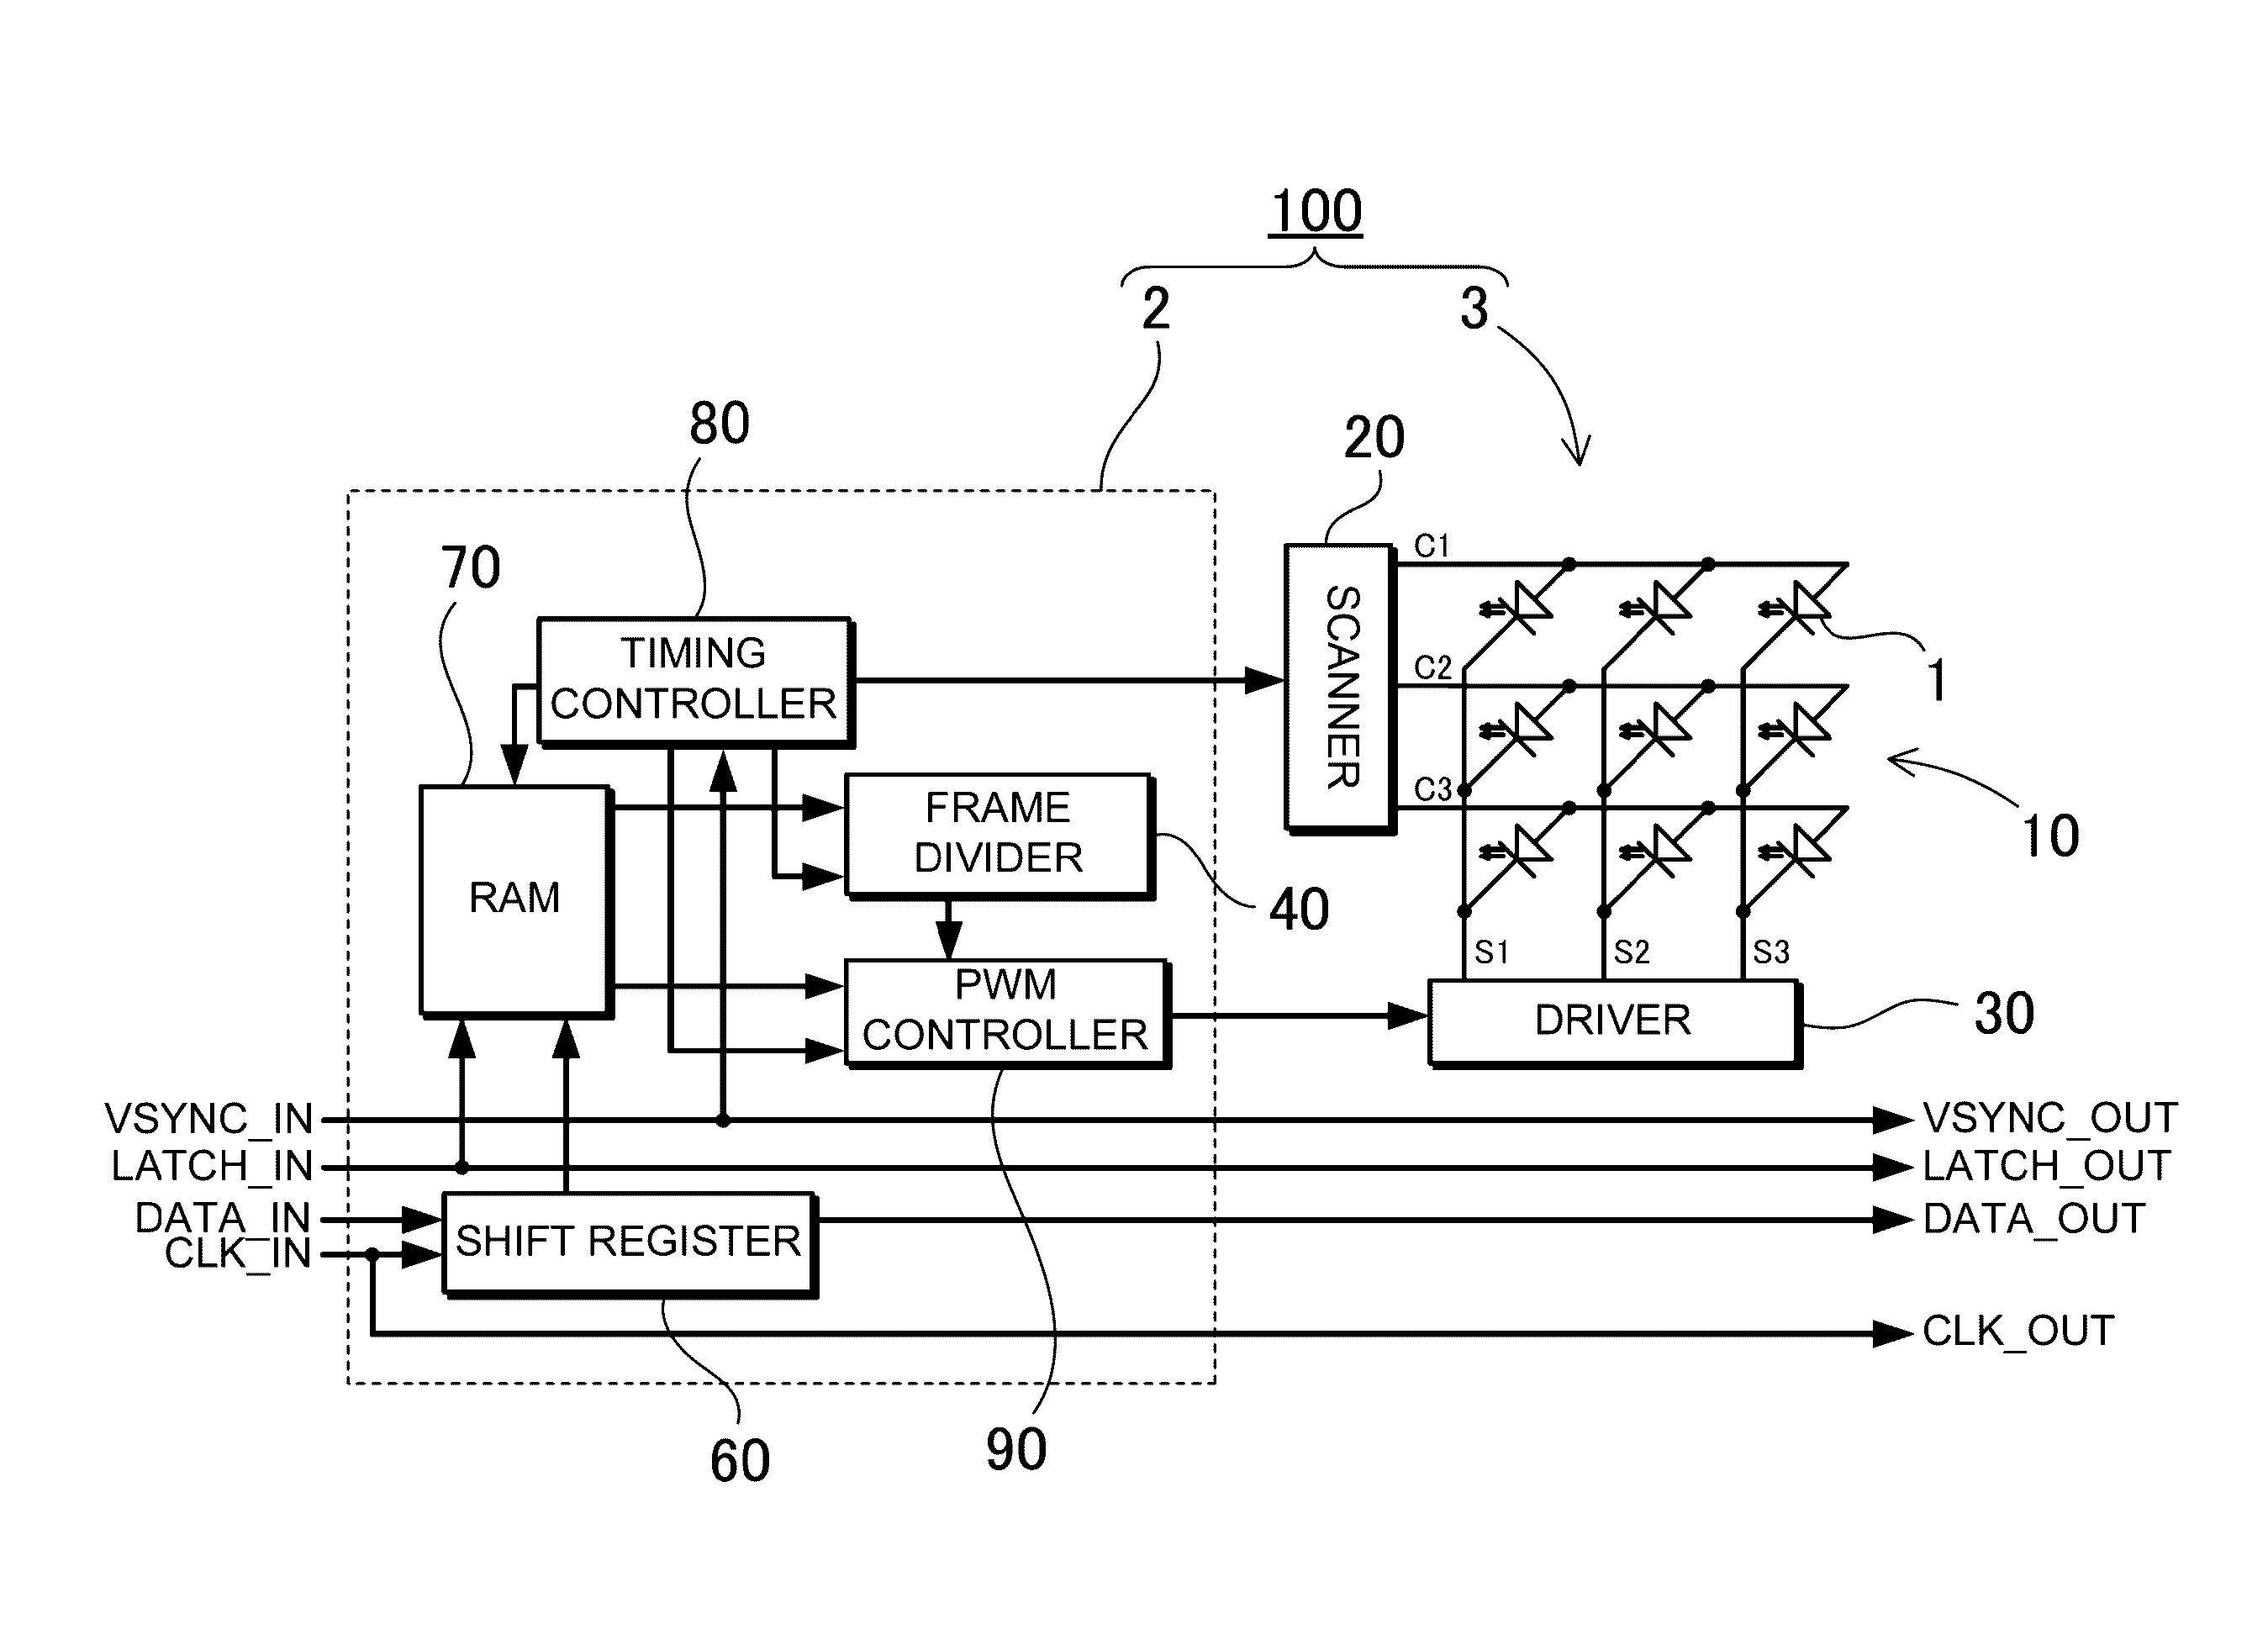 Display apparatus, lighting control circuit, and method of lighting display apparatus